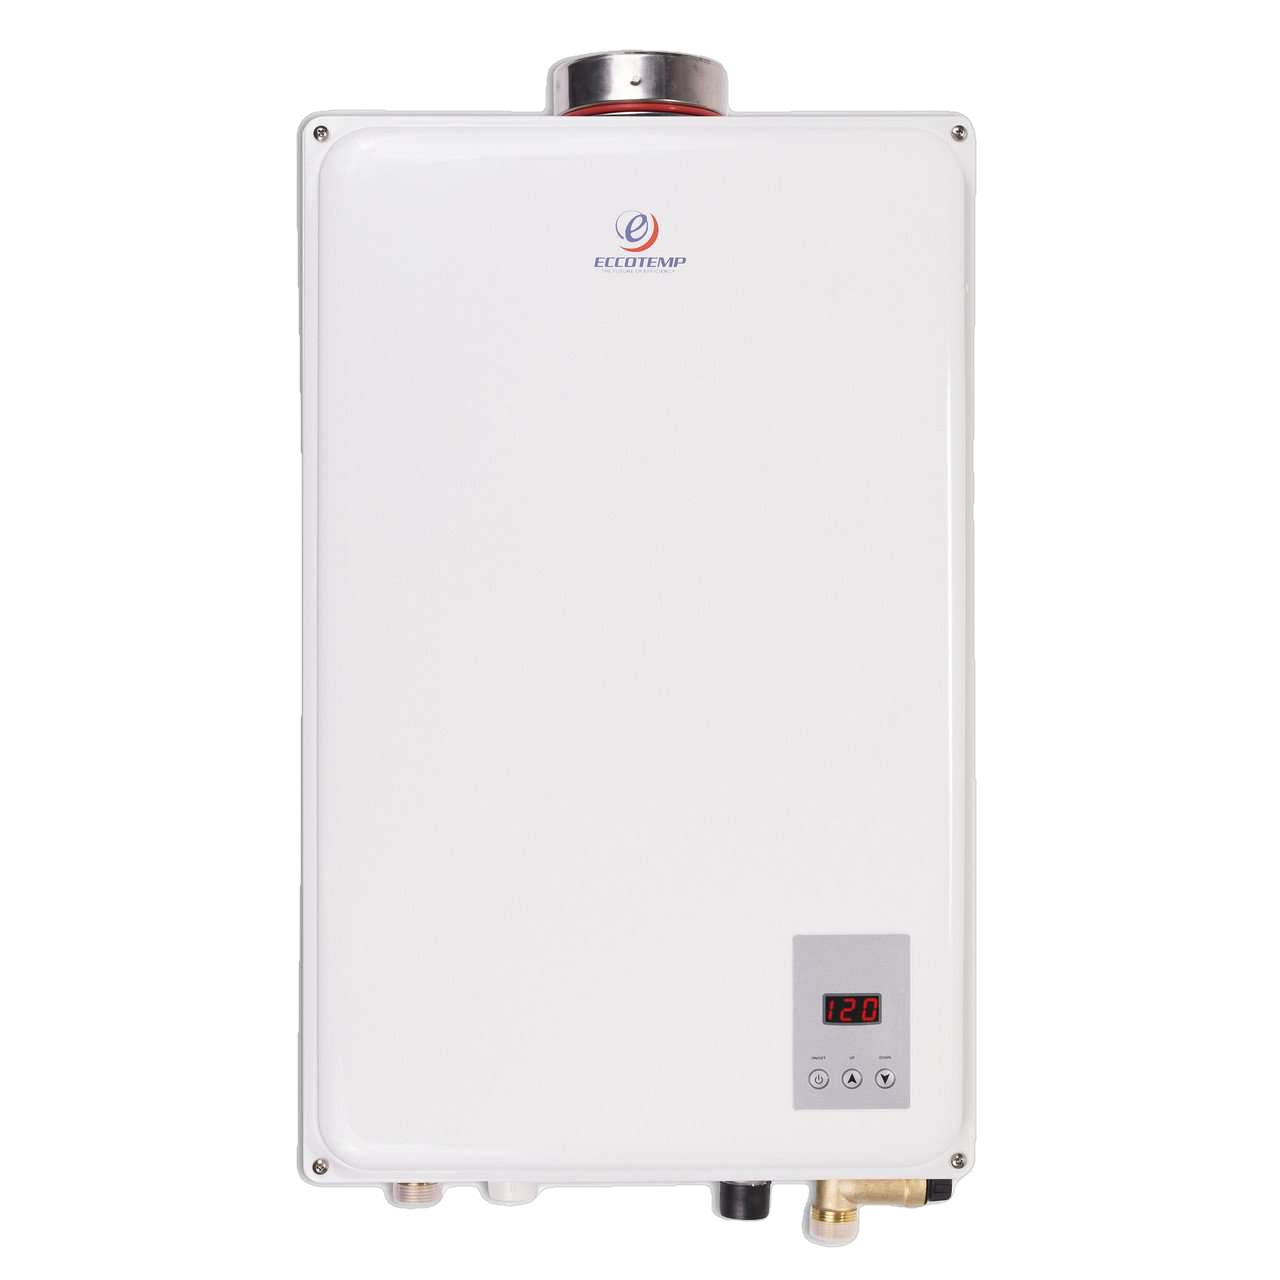 Eccotemp 45HI-NG 6.8 GPM Natural Gas Tankless Water Heater Manufacturer RFB